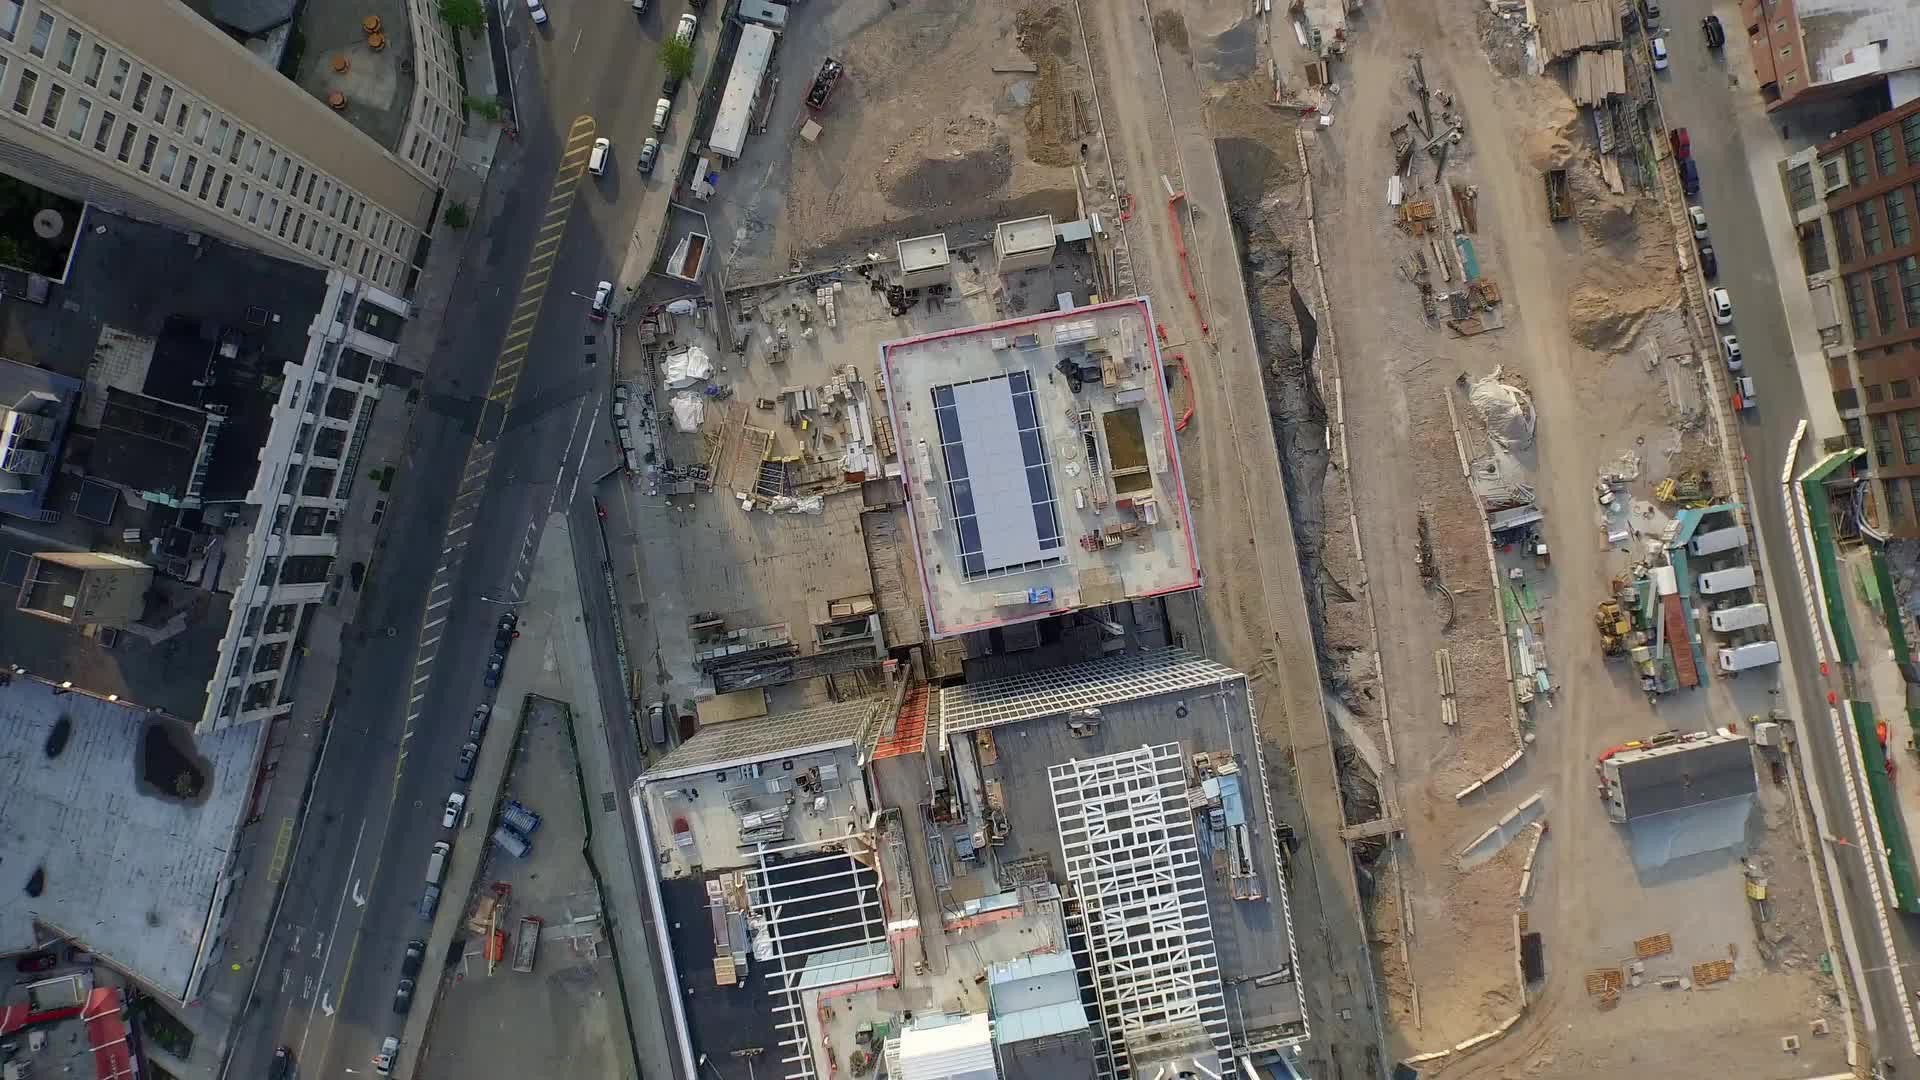 Harlem construction site over Uptown Manhattan 4K NYC